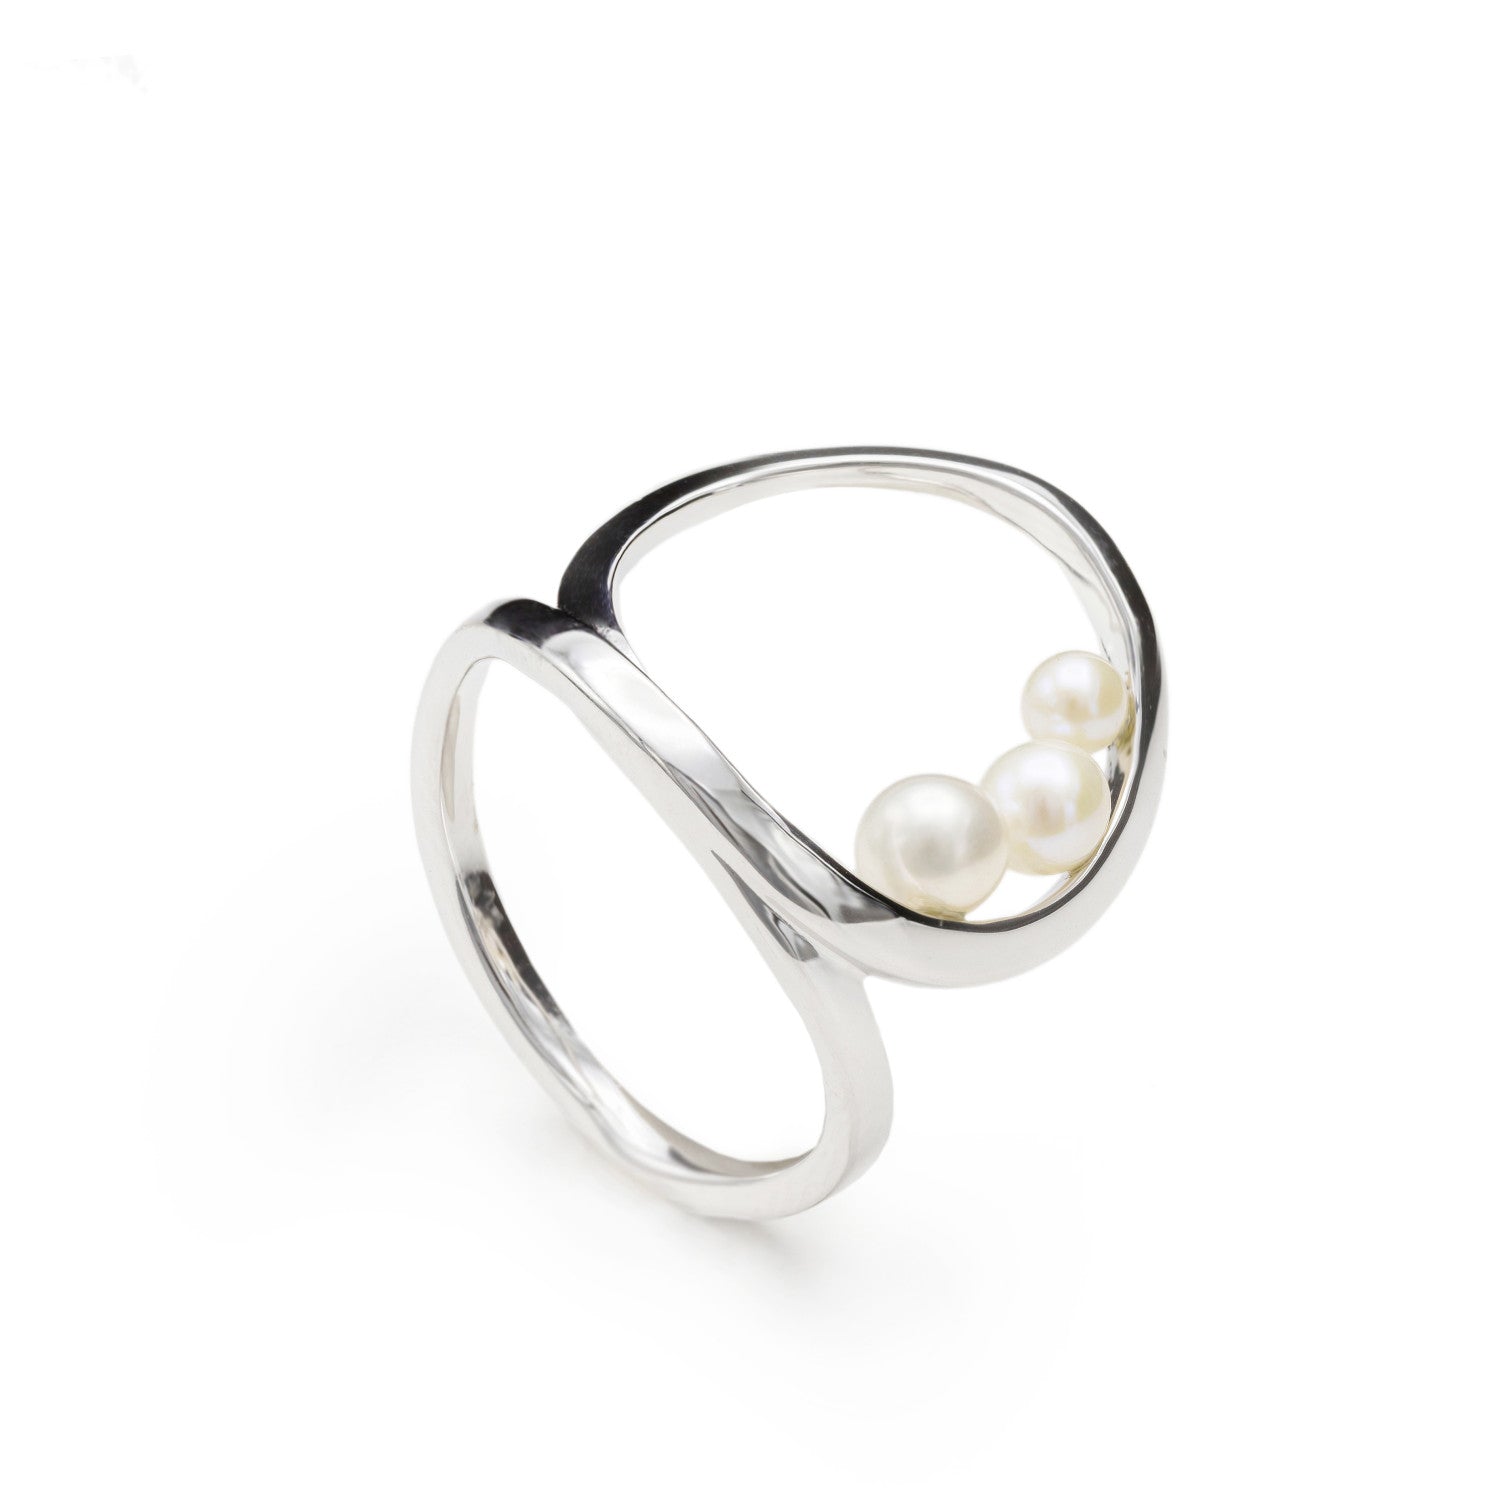 Anillos con perlas de plata diseño circular entrelazado